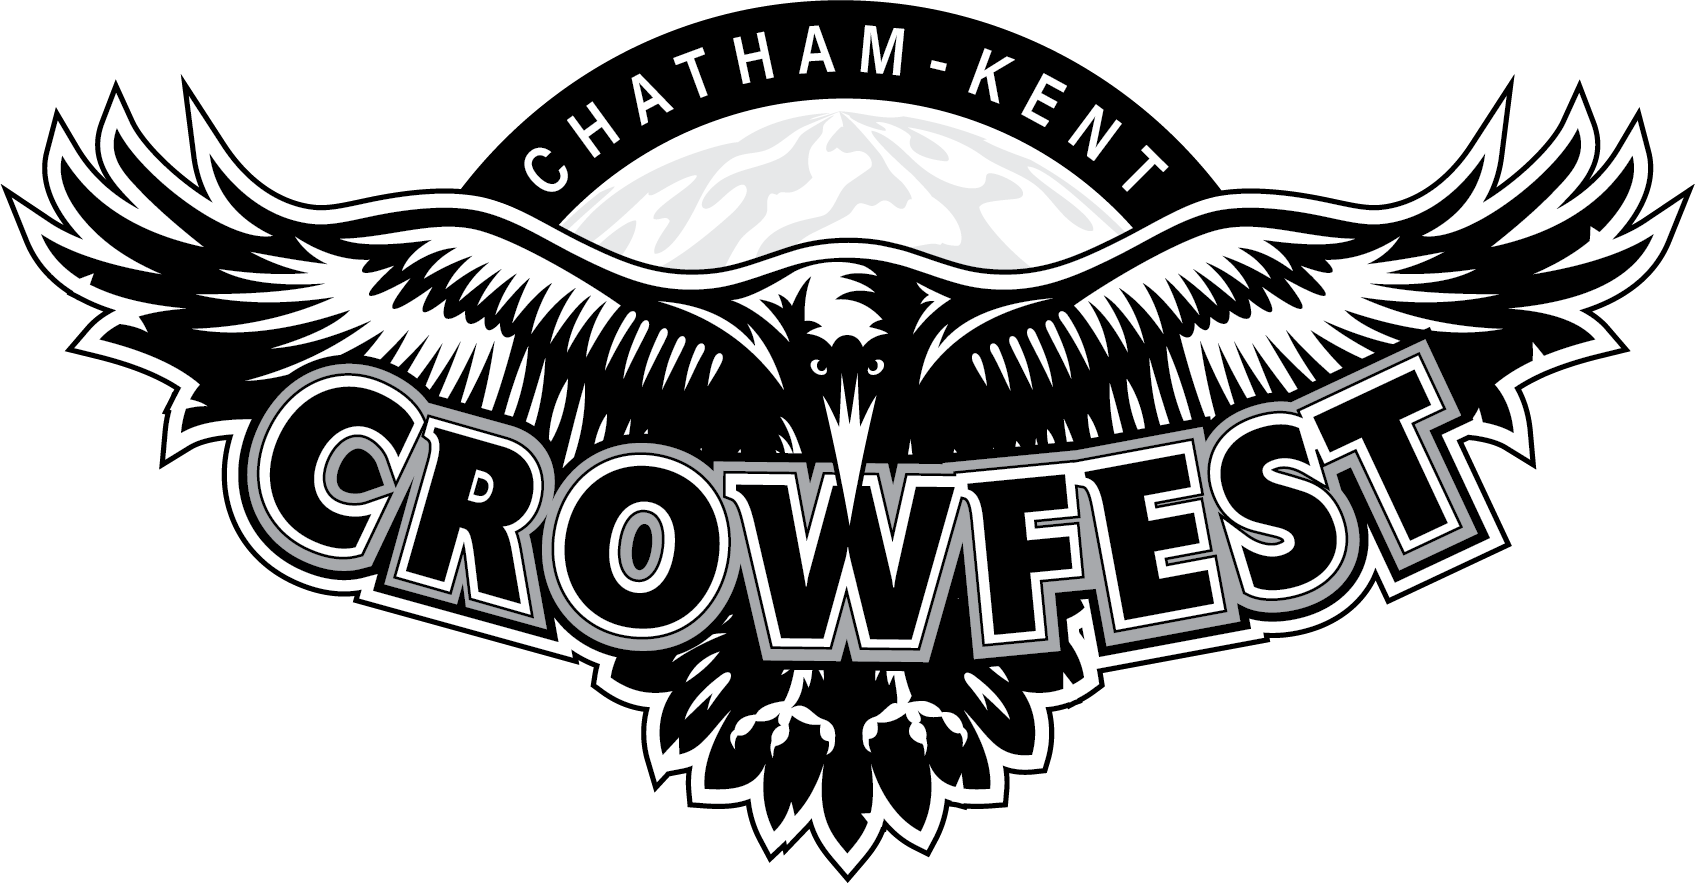 Crowfest Chatham-Kent